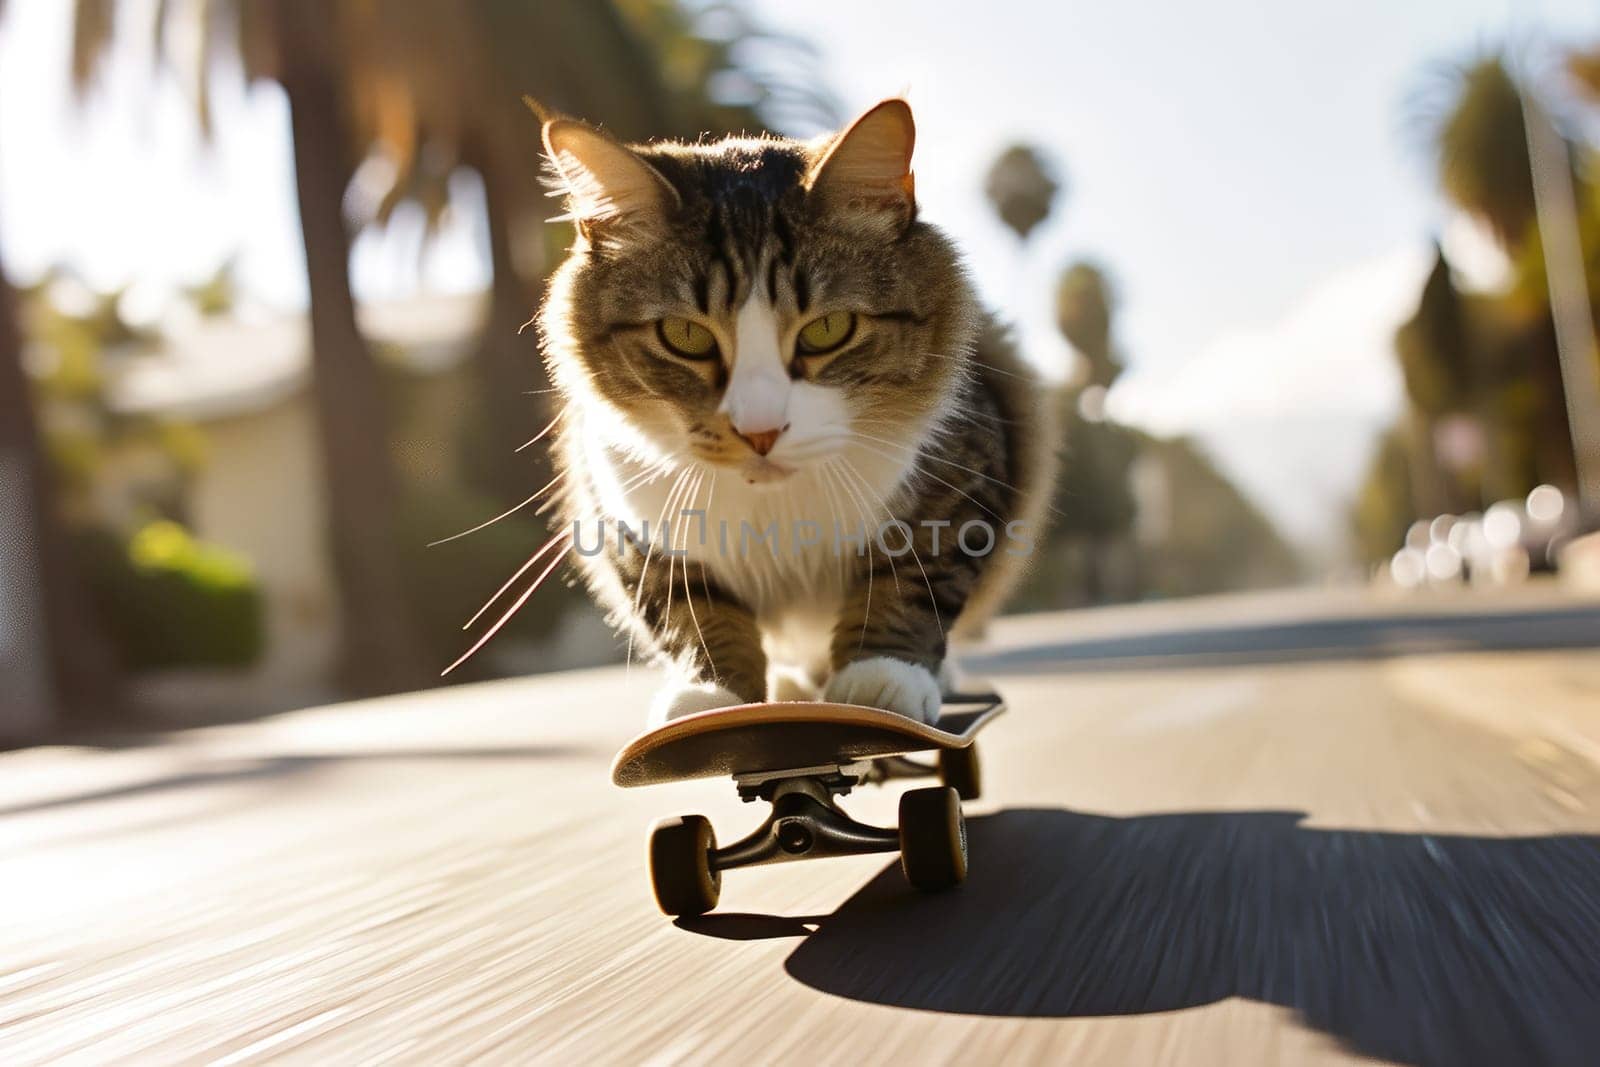 Skateboarding cat. Funny cat rides skateboard on the street in summer city by nijieimu